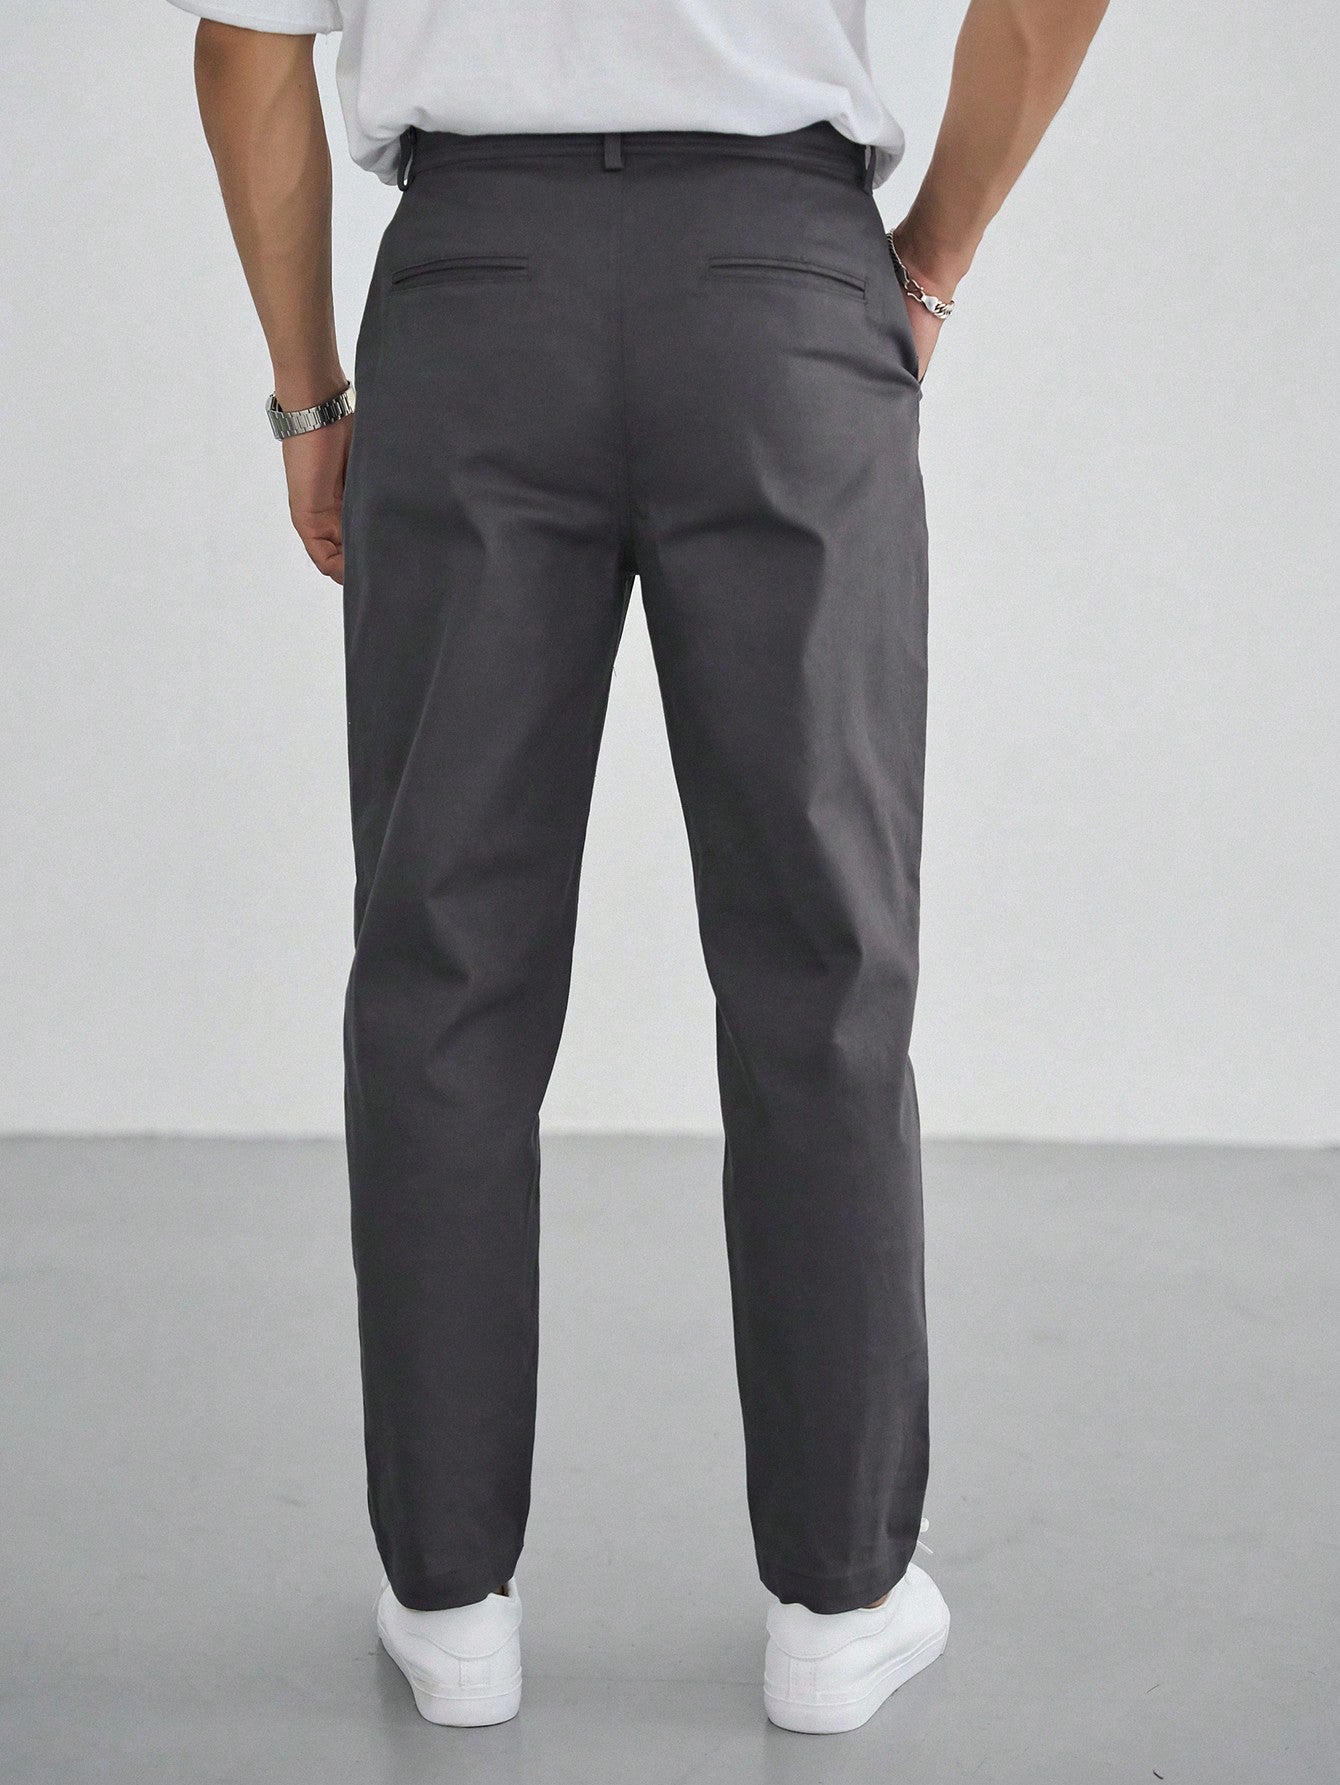 Kpop Men's Straight-leg Pants With Side Pockets